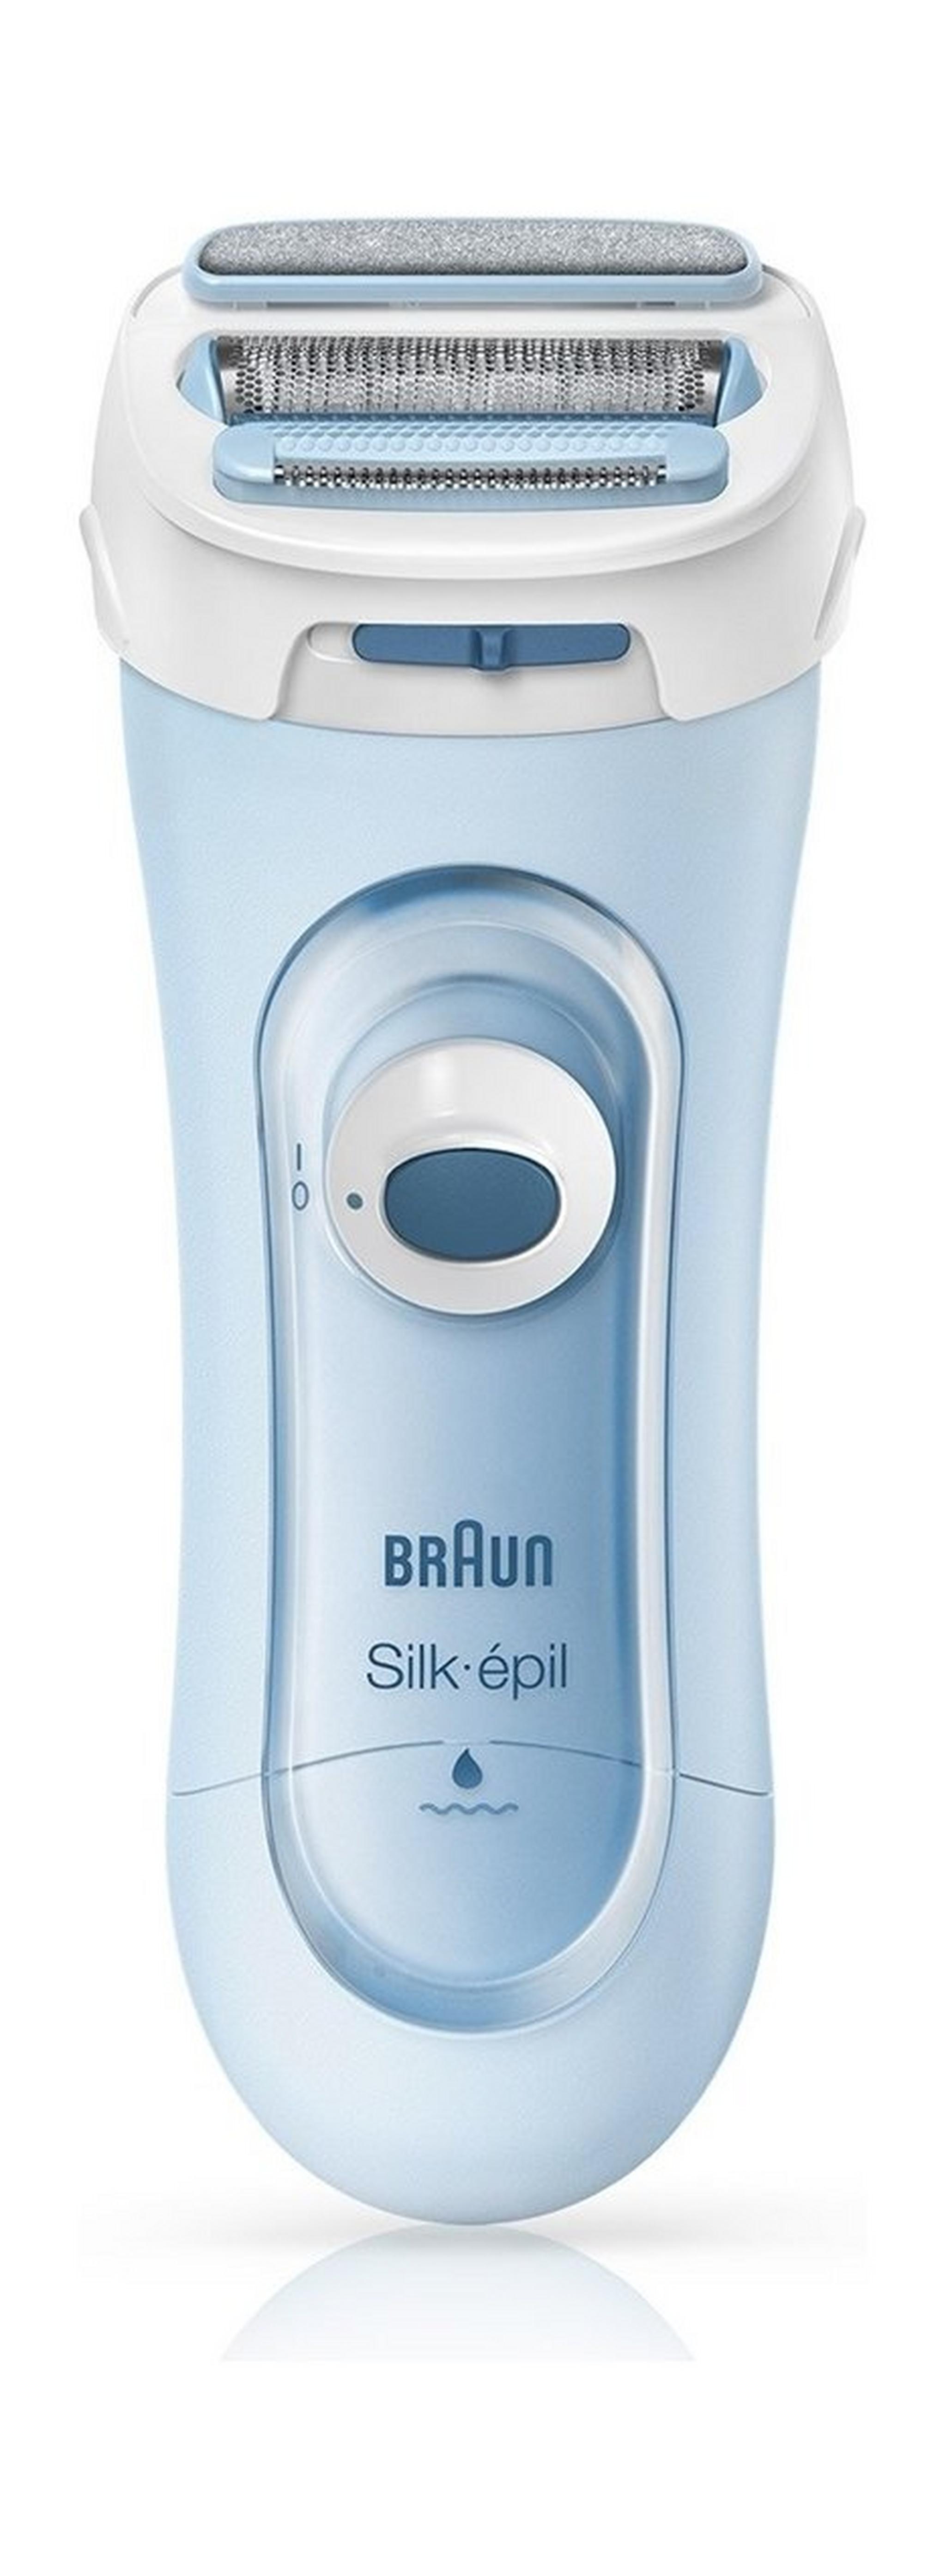 Braun Silk-épil 5160 Wet & Dry Electric Shaver Lady Shaver